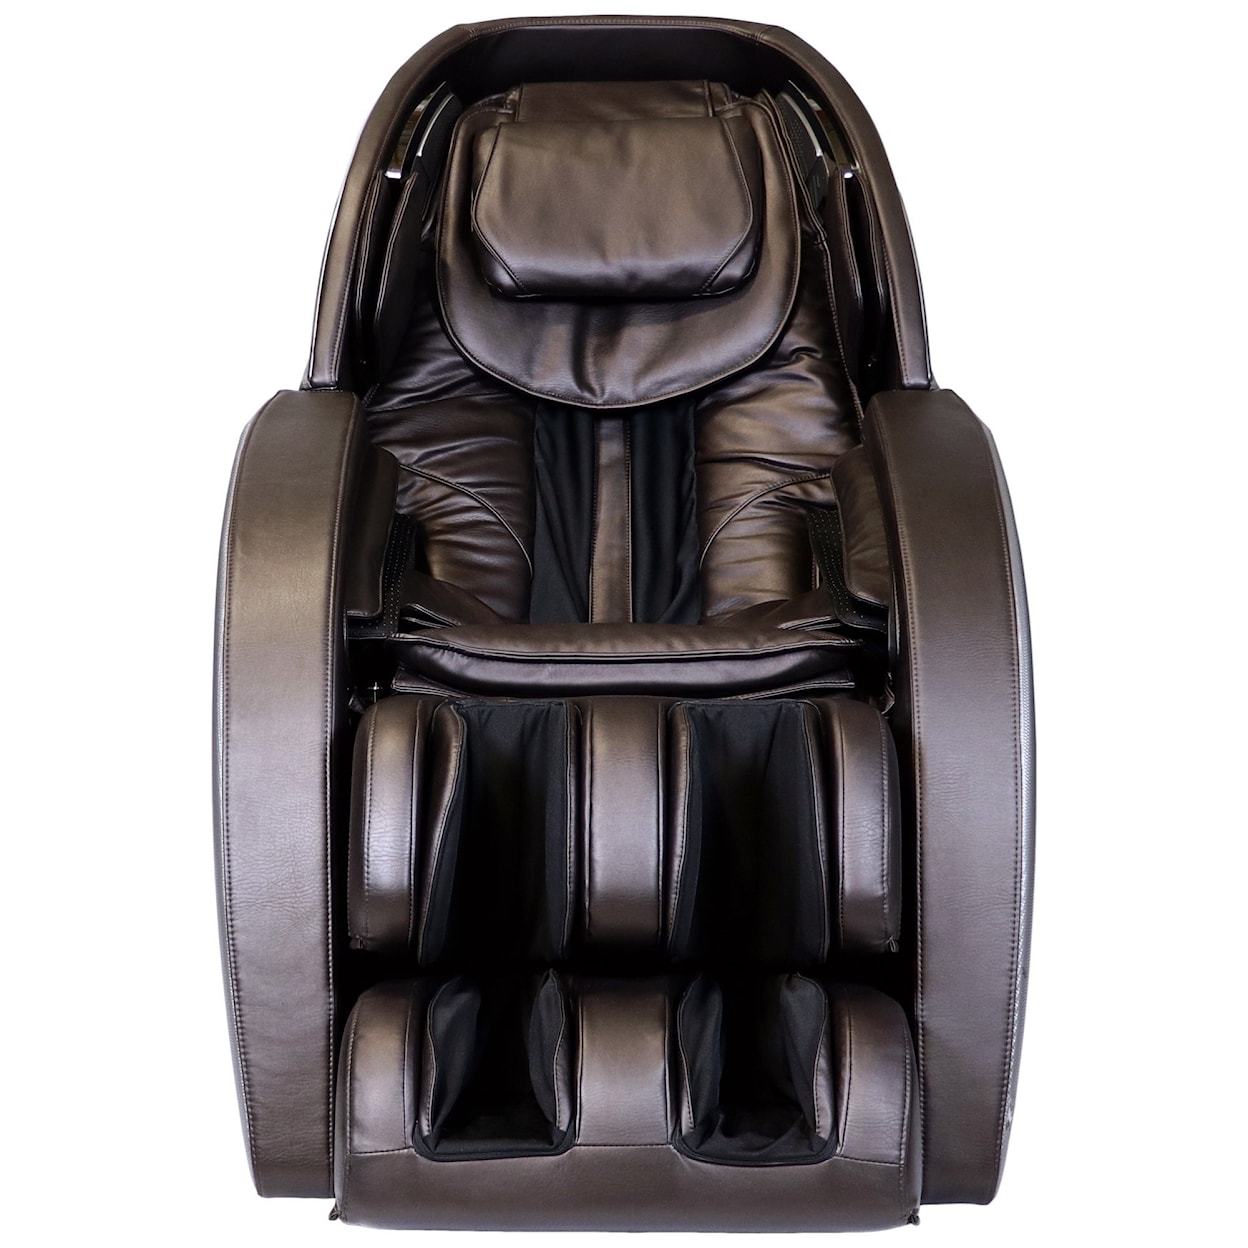 Infinity Genesis Max Reclining Massage Chair